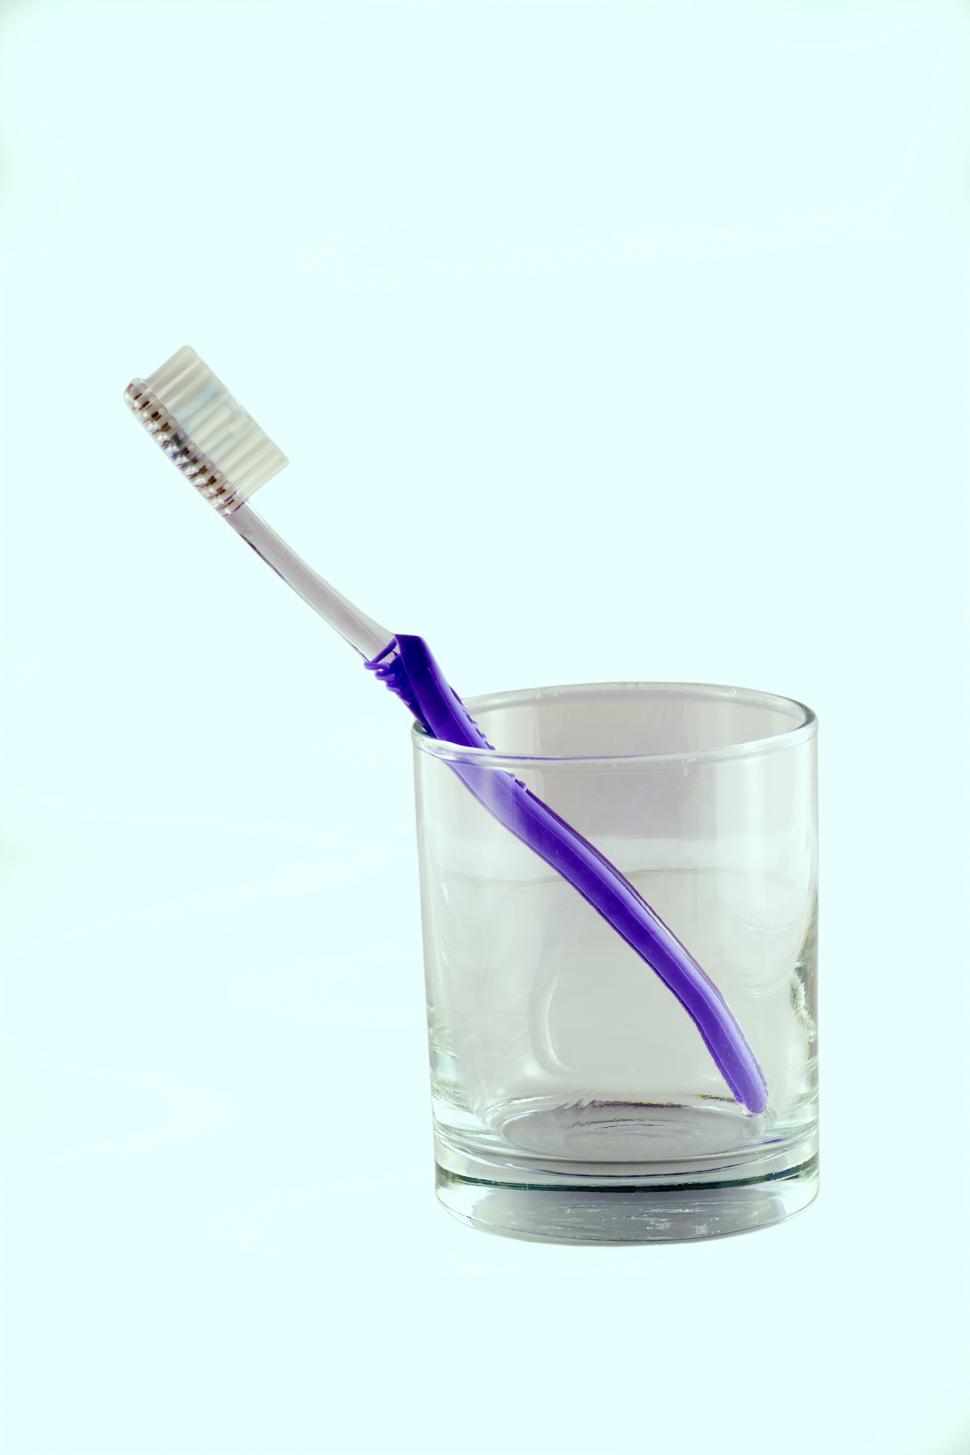 Free Image of Tooth Brush 